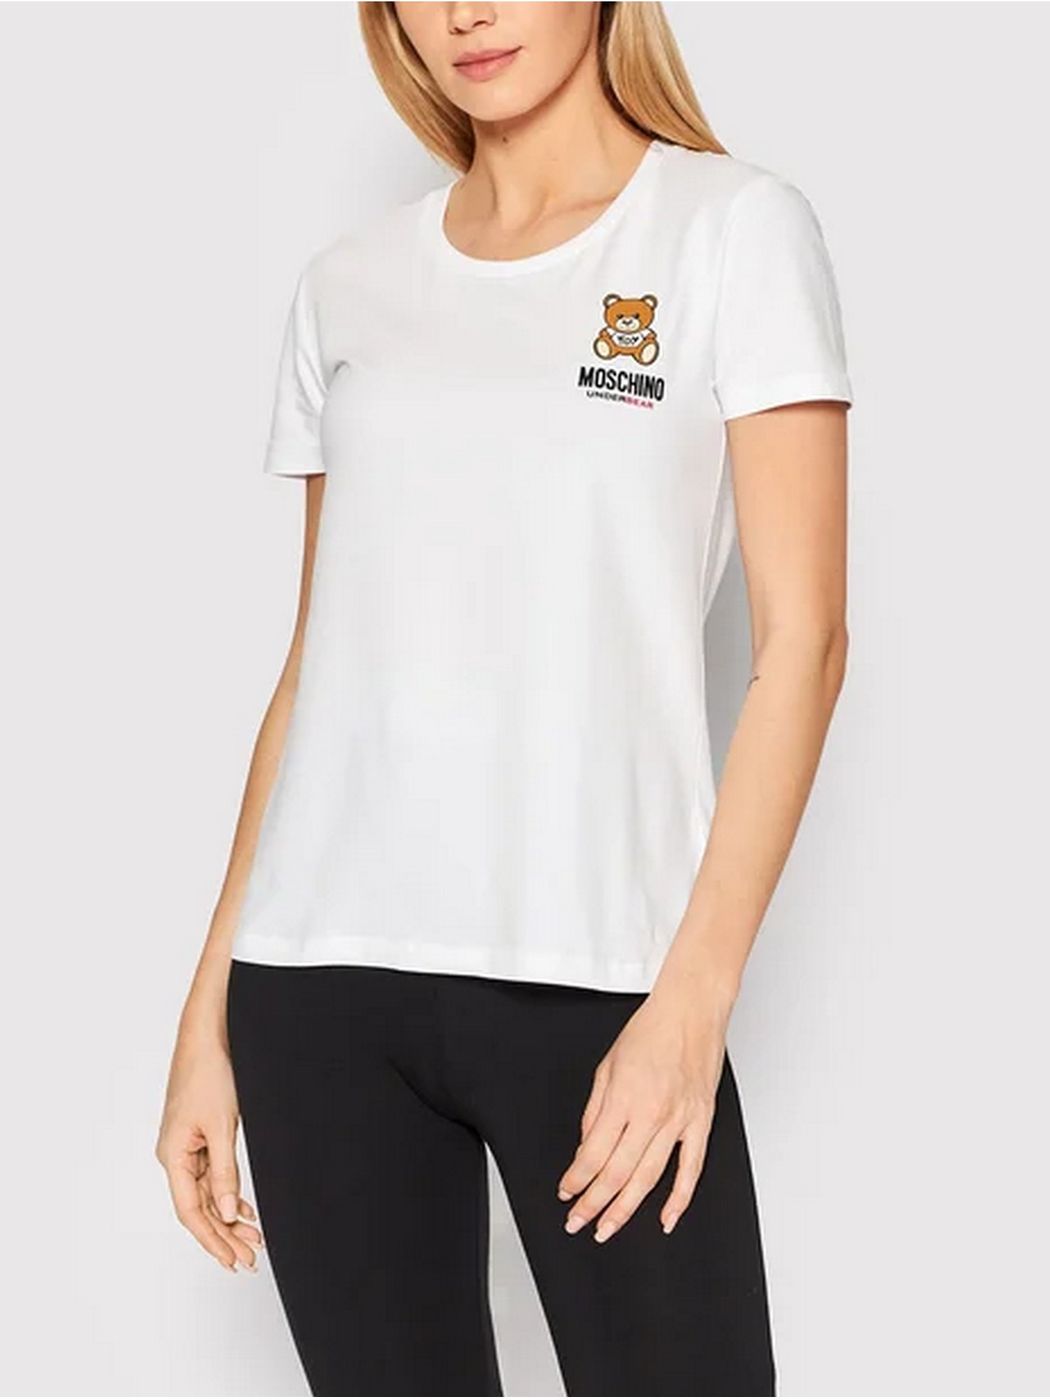 MOSCHINO UNDERWEAR T-Shirt e Polo Donna  ZUA1912 9003 0001 Bianco